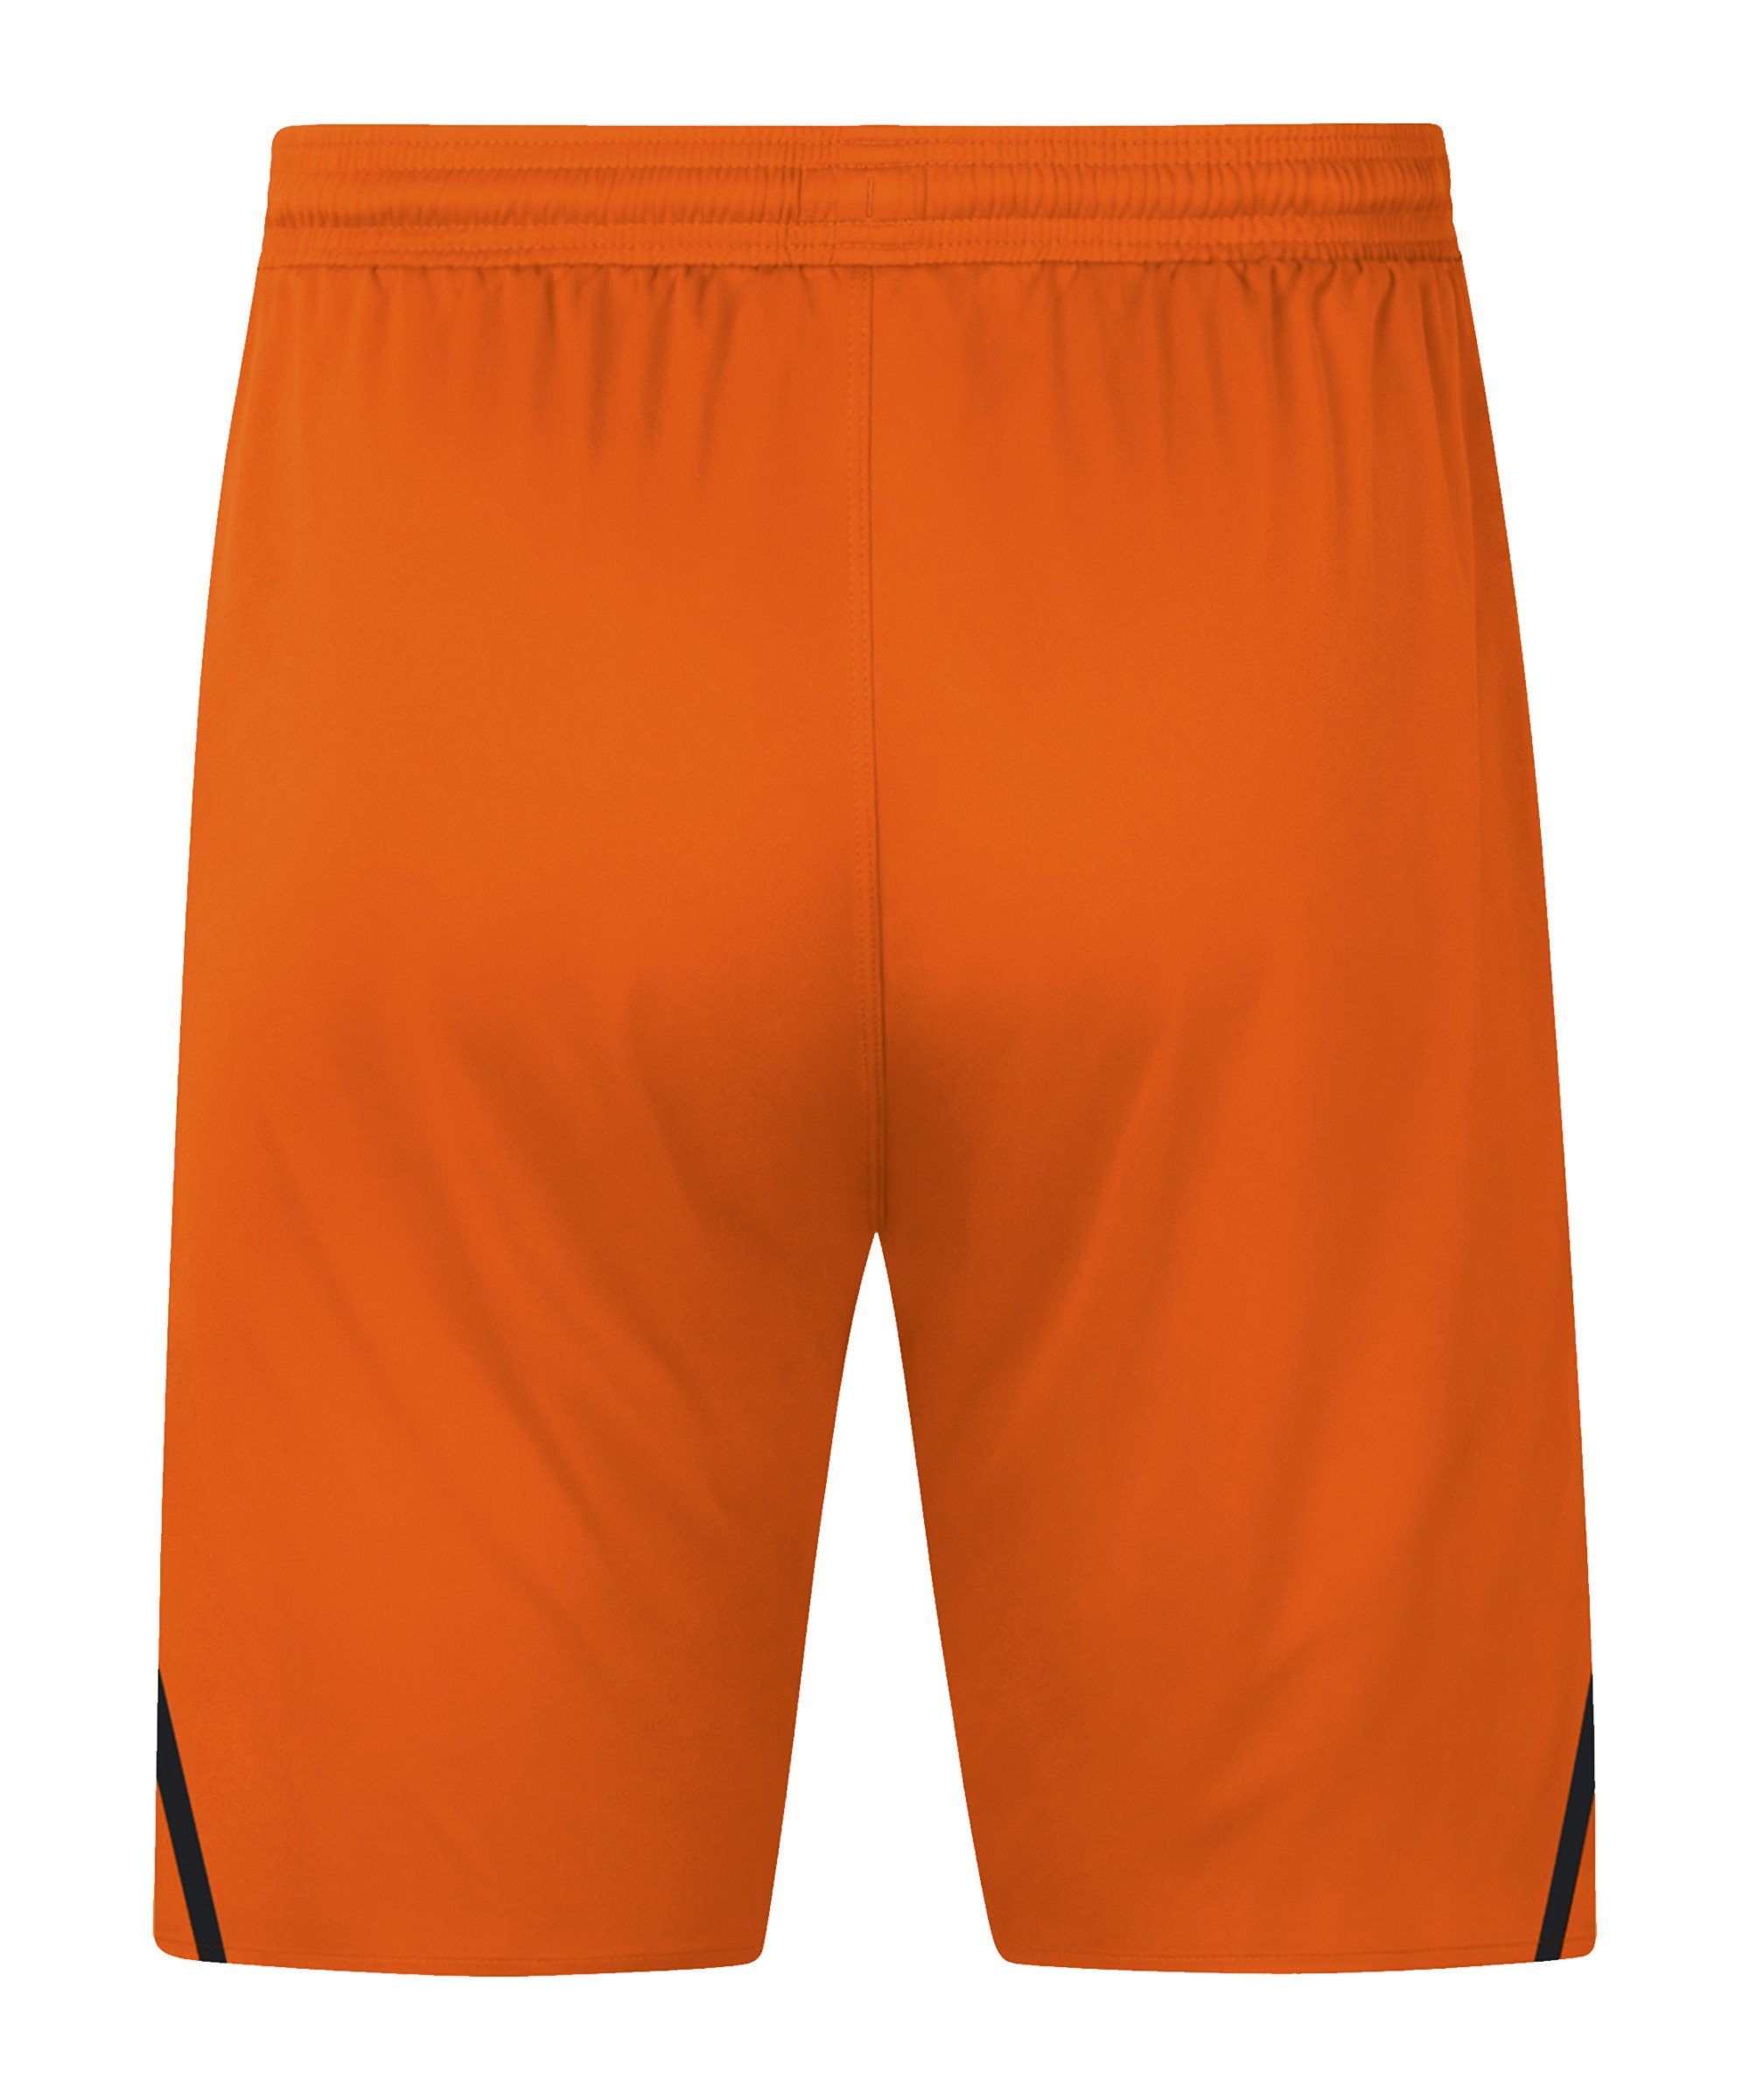 Jako Sporthose Challenge orangeschwarz Short